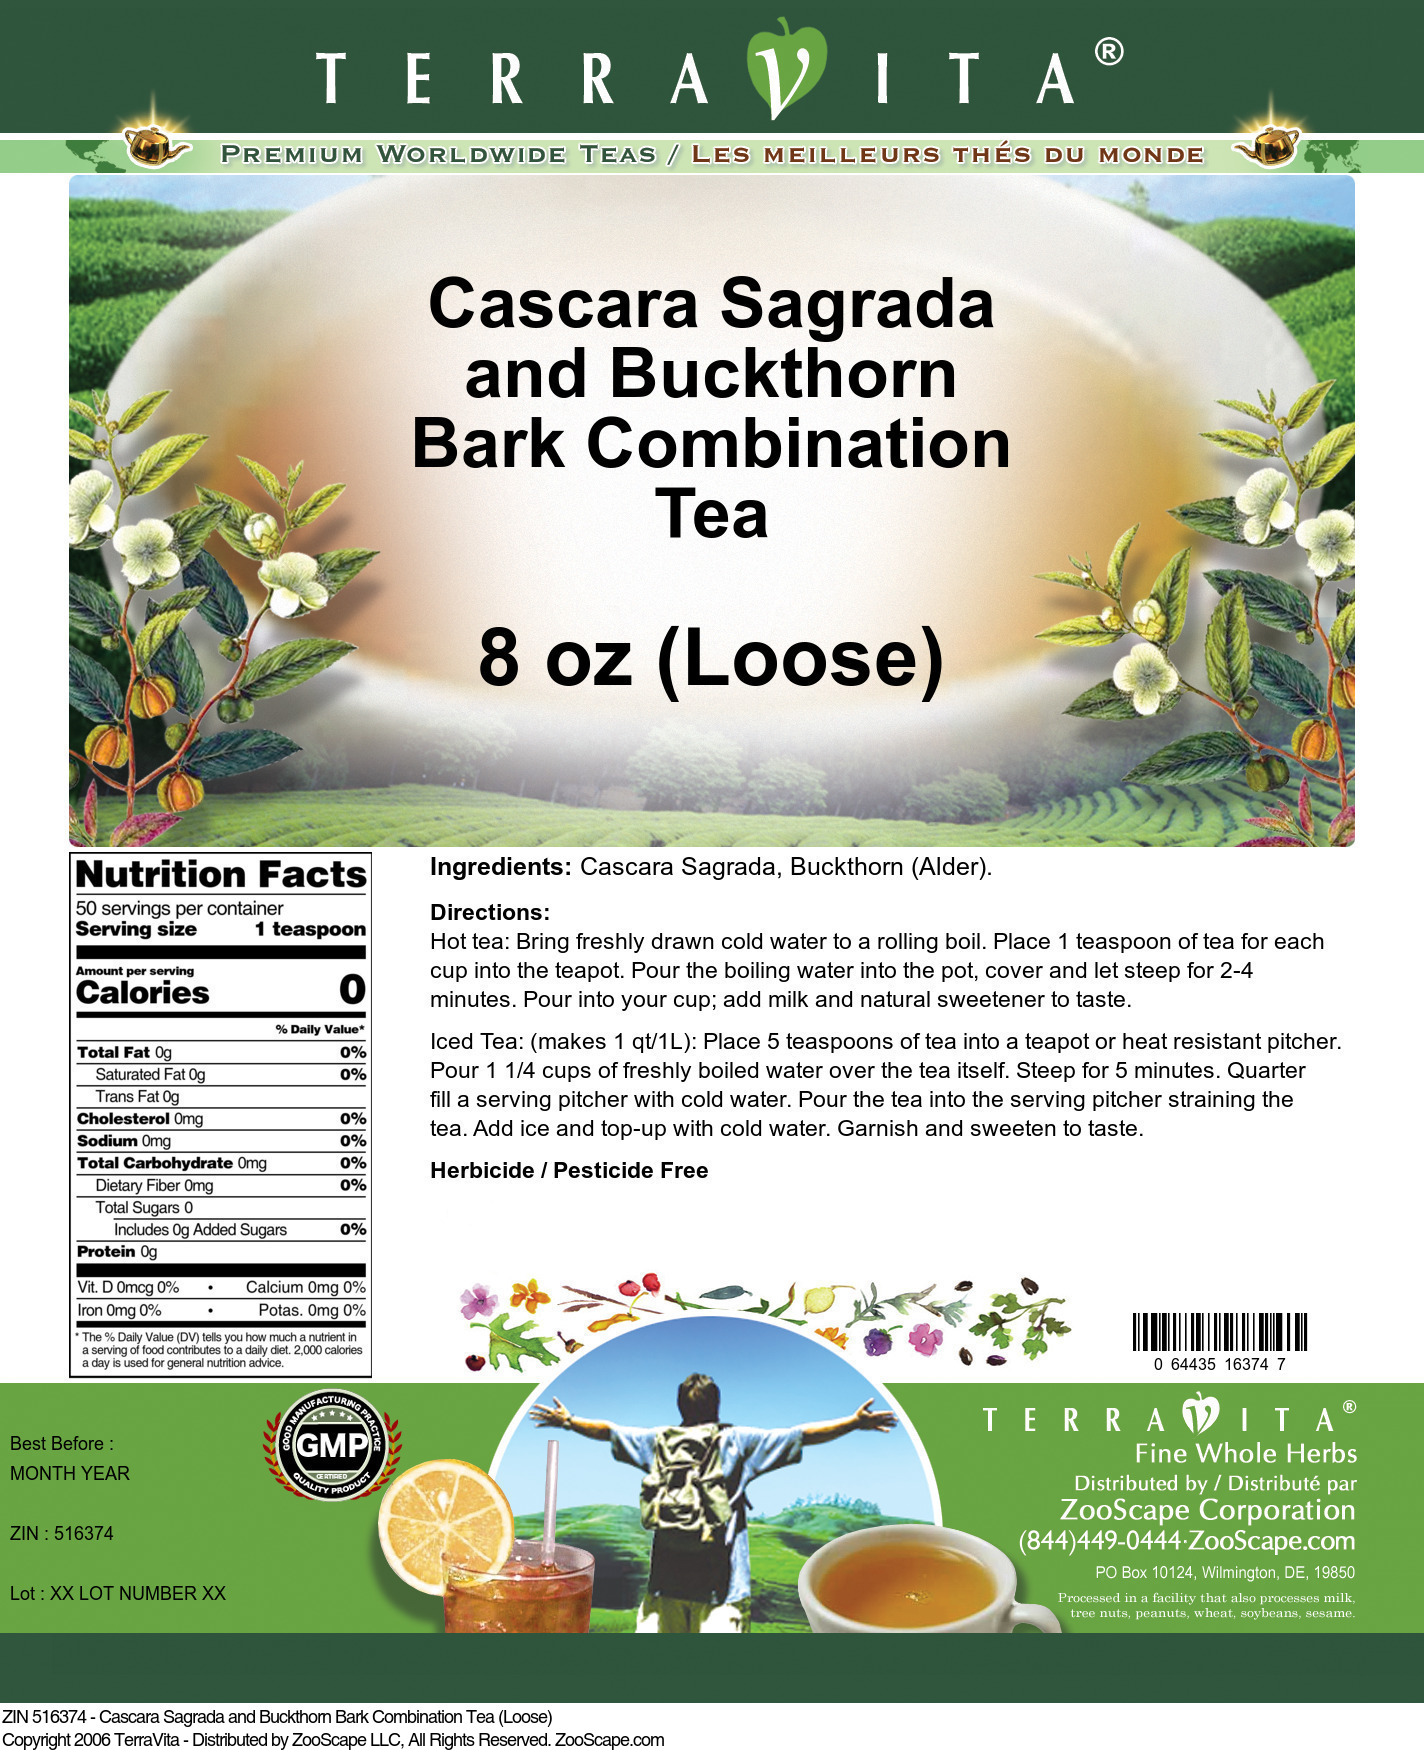 Cascara Sagrada and Buckthorn Bark Combination Tea (Loose) - Label